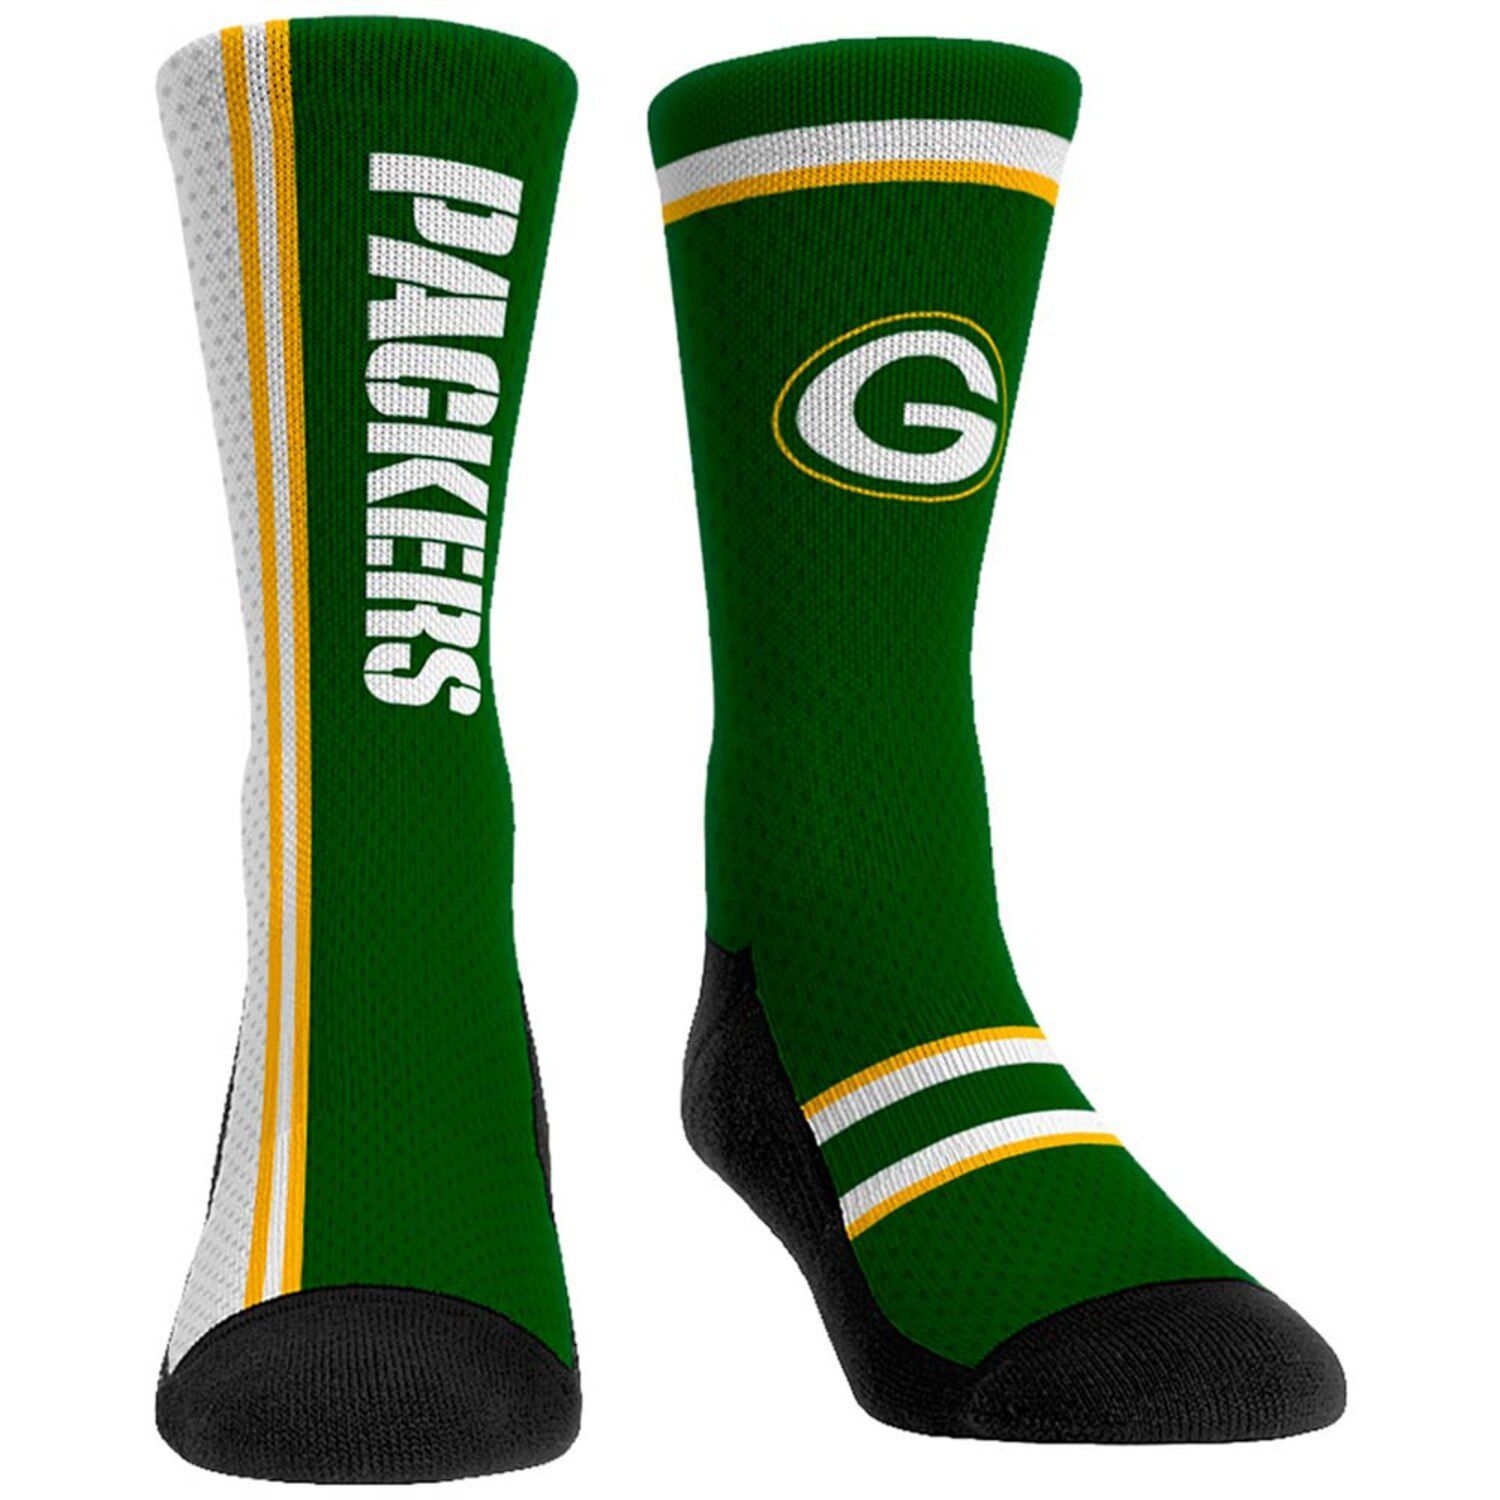 Image for Unbranded Youth Rock Em Socks Green Bay Packers Logo Classic Uniform Crew Socks at Kohl's.